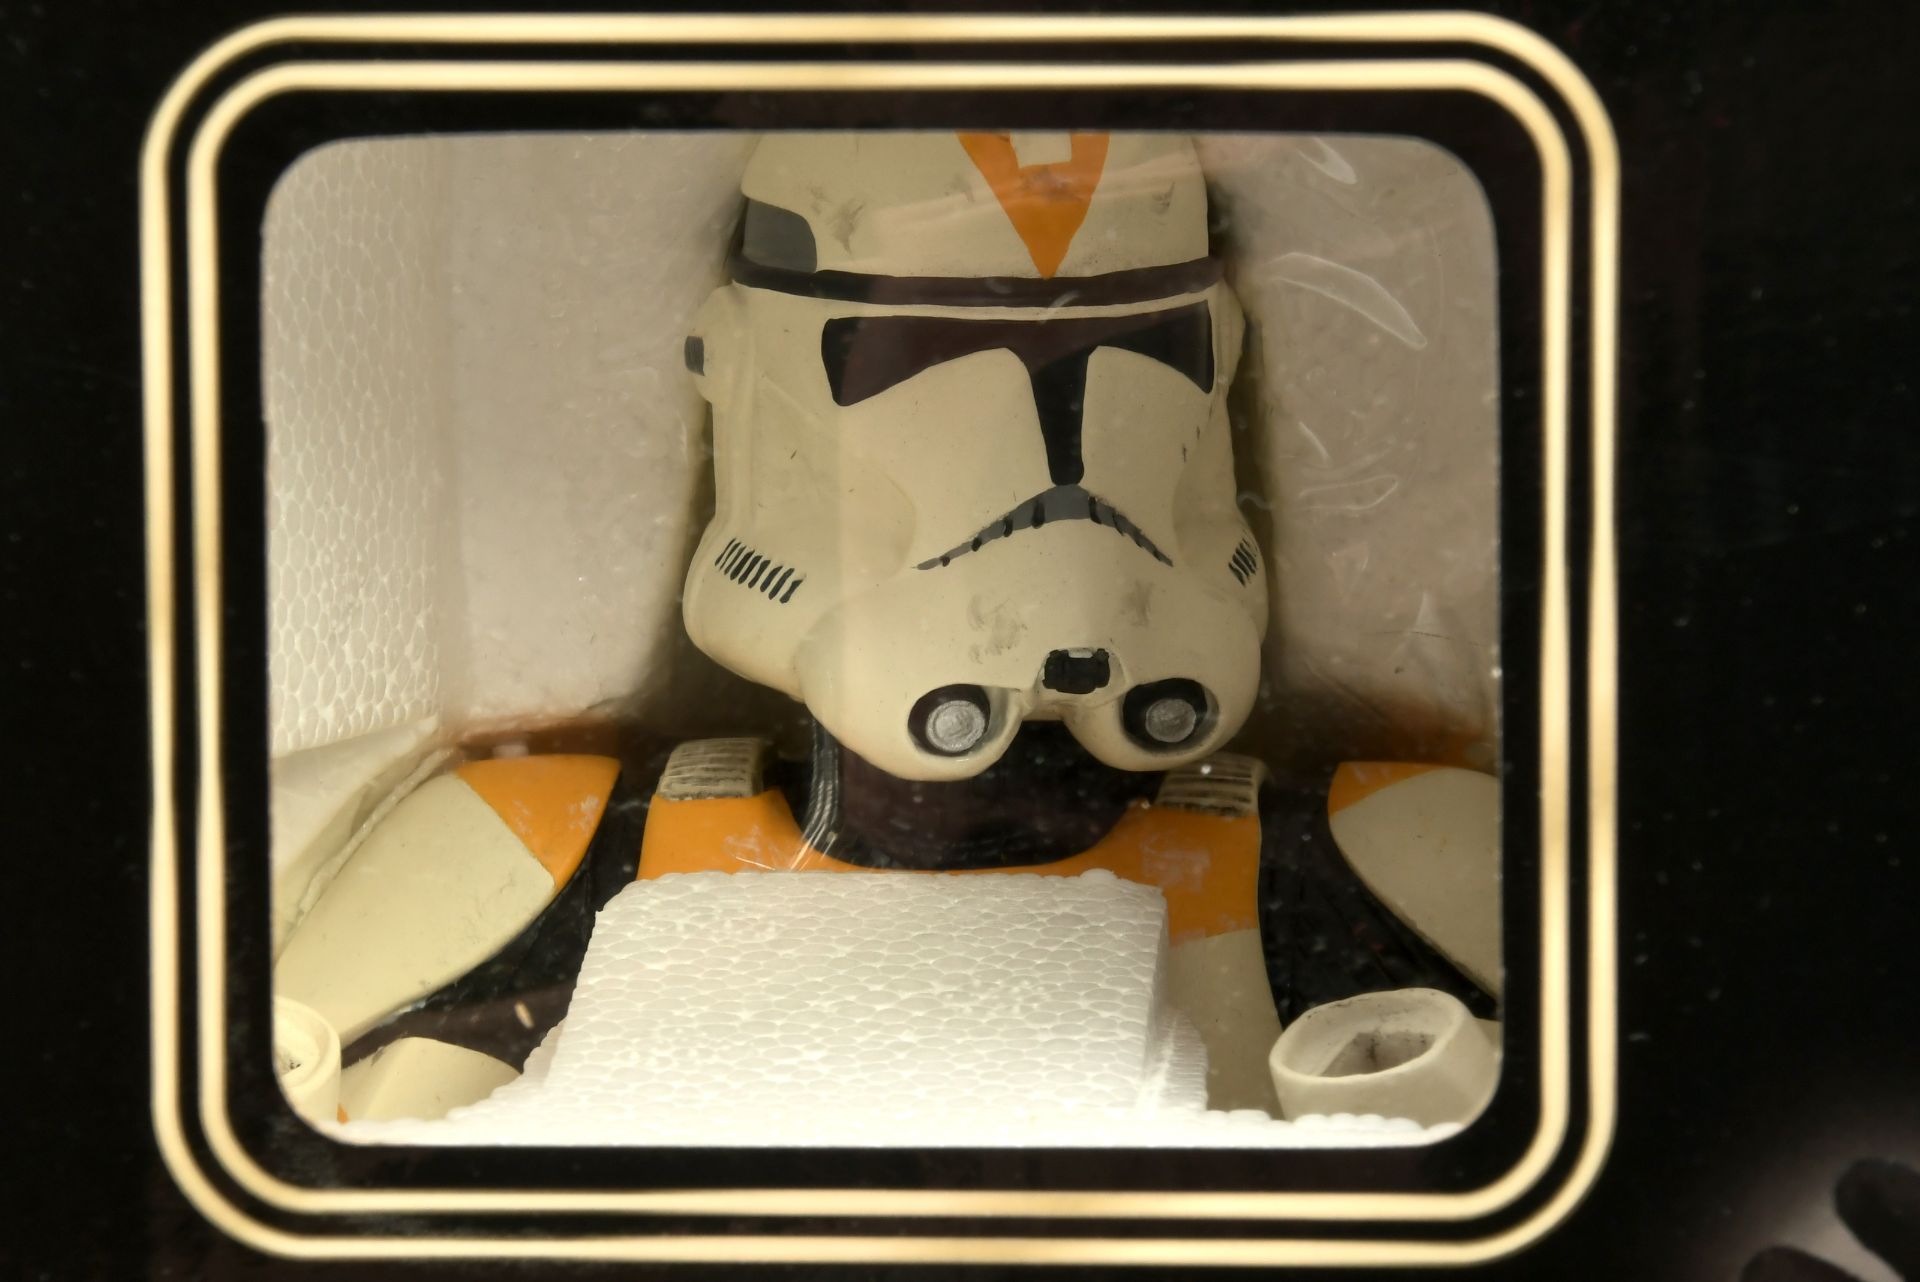 Gentle Giant Star Wars Clone Trooper (Utapau Trooper) Deluxe collectible bust - Image 2 of 2